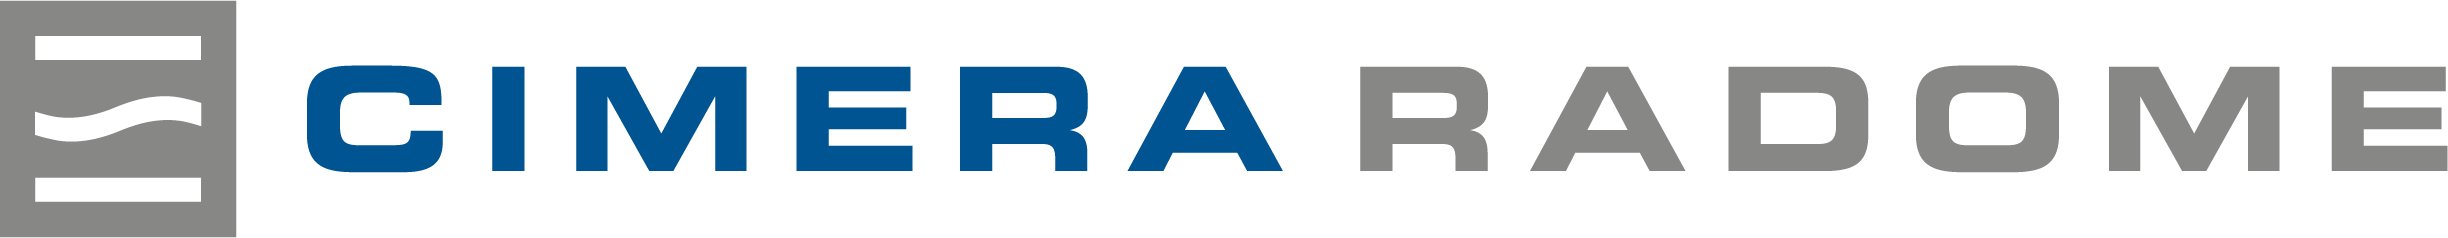 4a manufacturing cimera radome logo